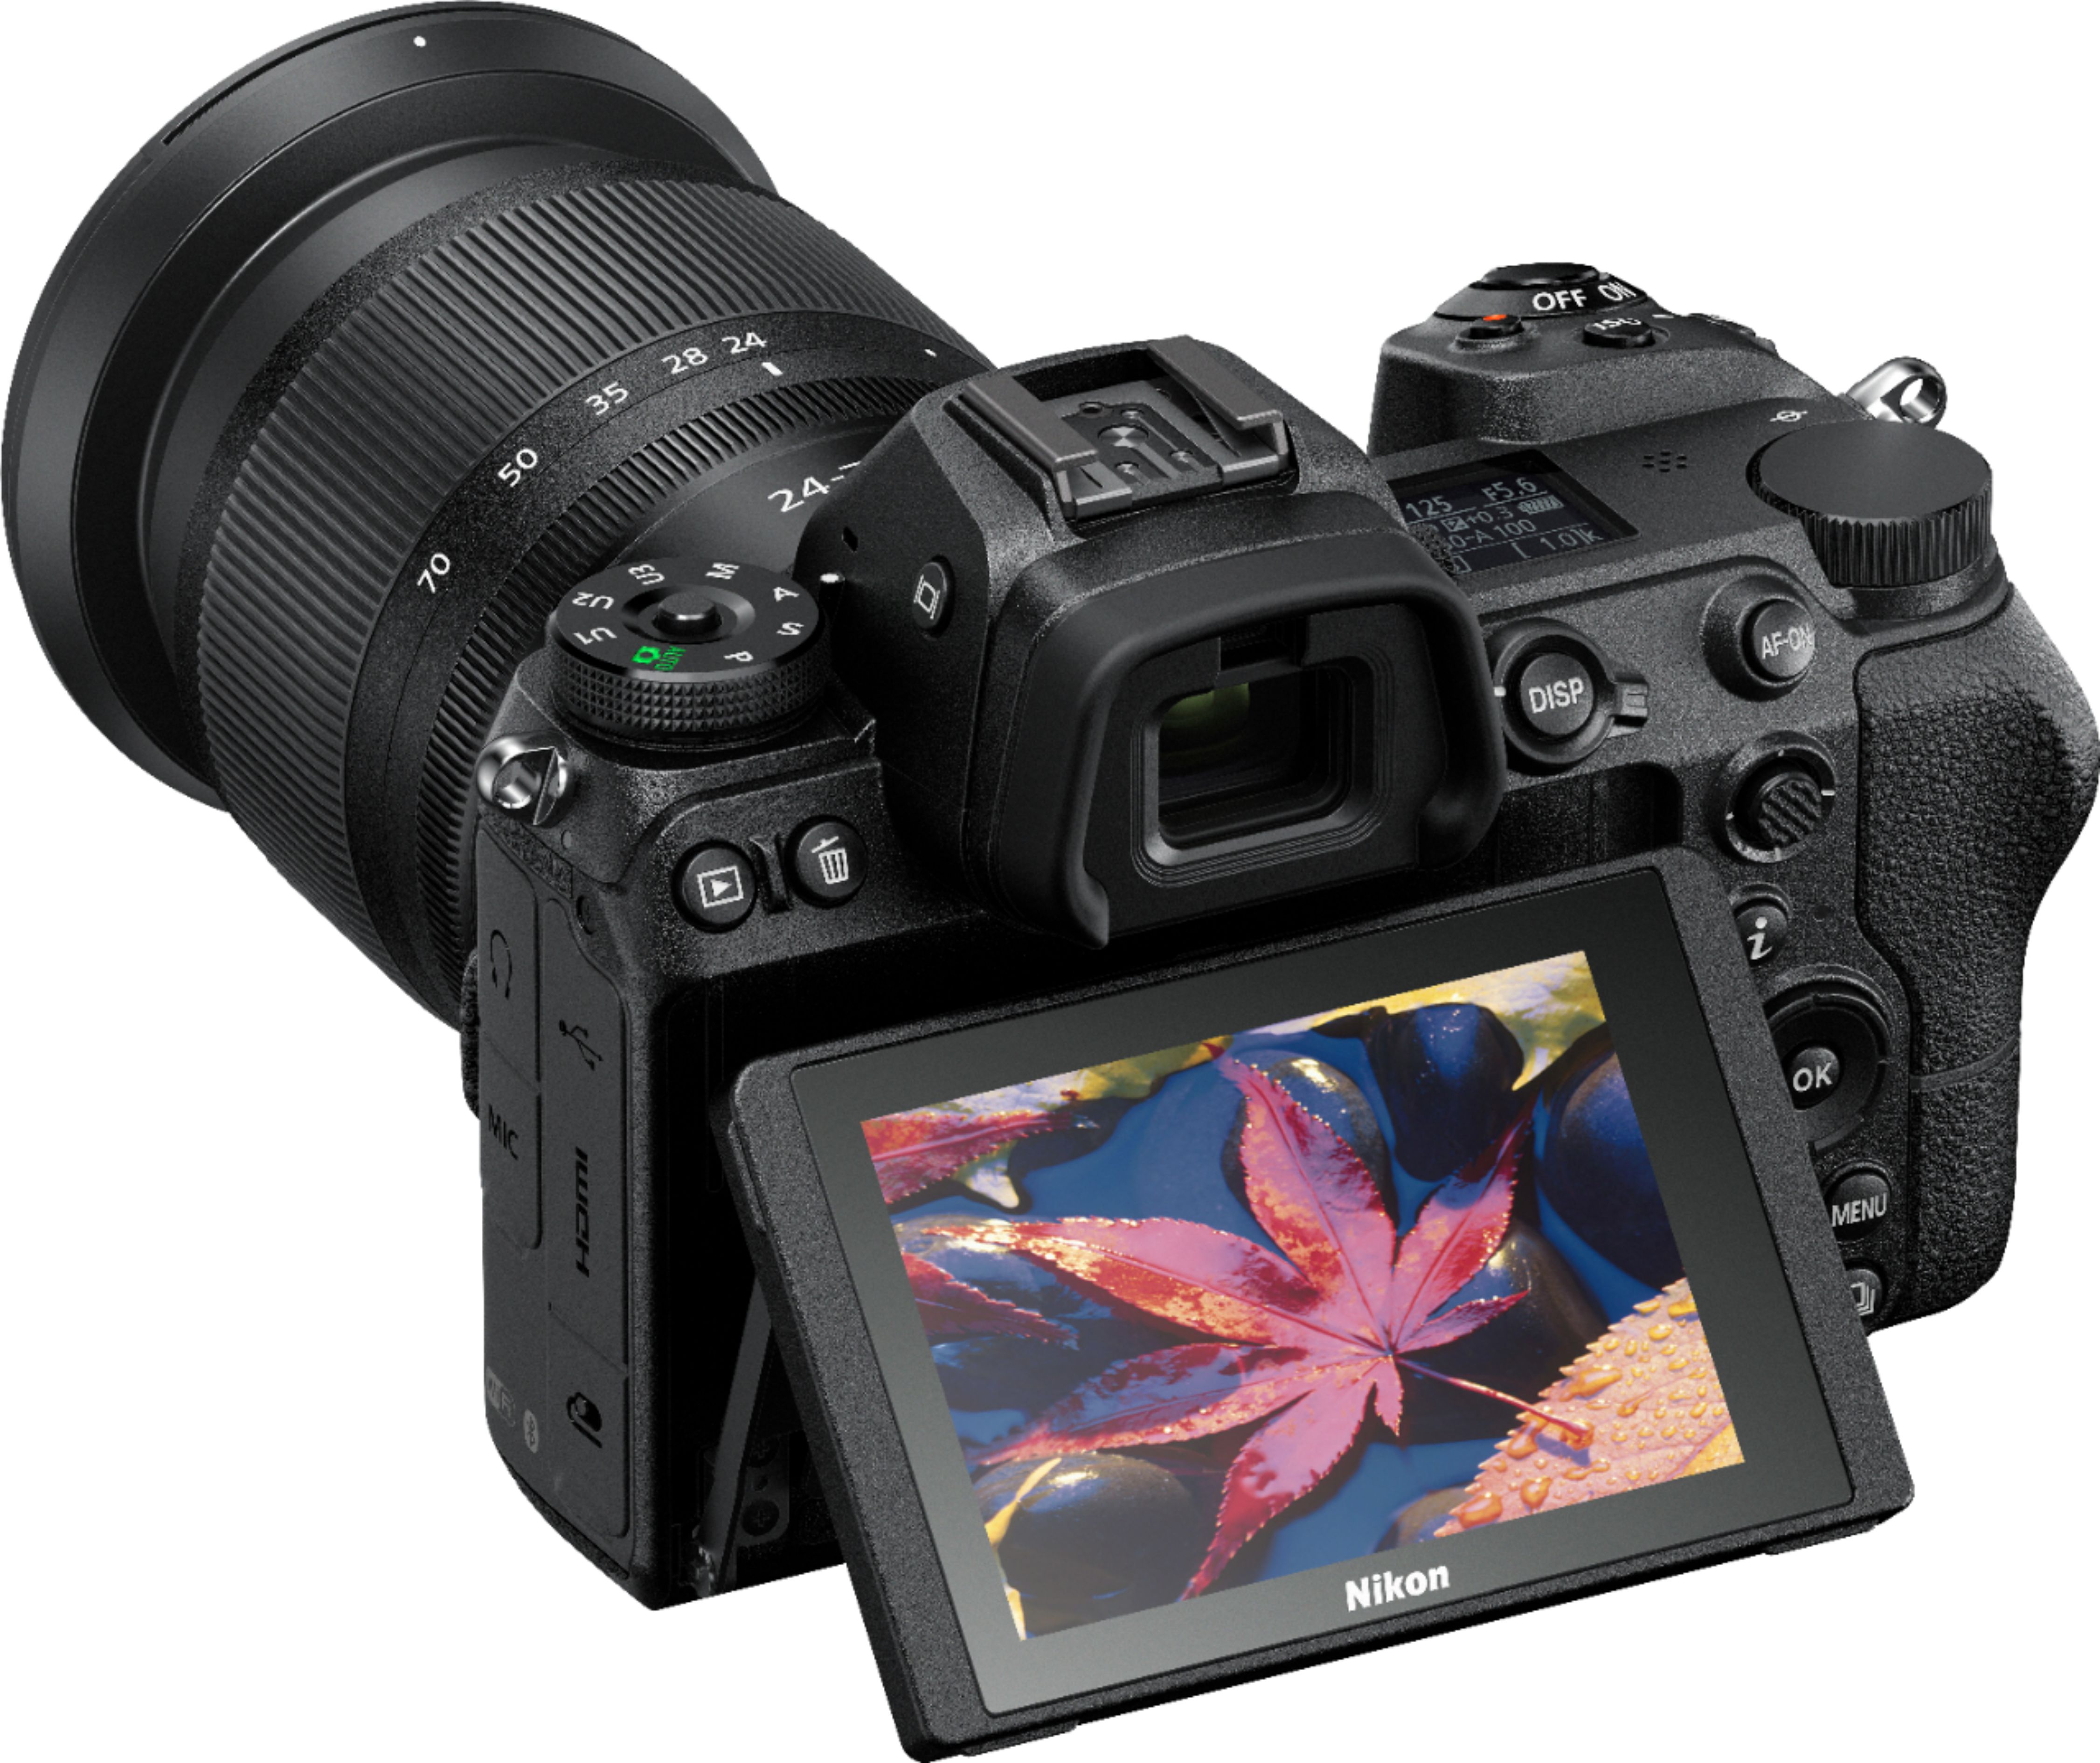 Distill Siege Street address Nikon Z6 Mirrorless 4K Video Camera with NIKKOR Z 24-70mm Lens Black 1598 -  Best Buy